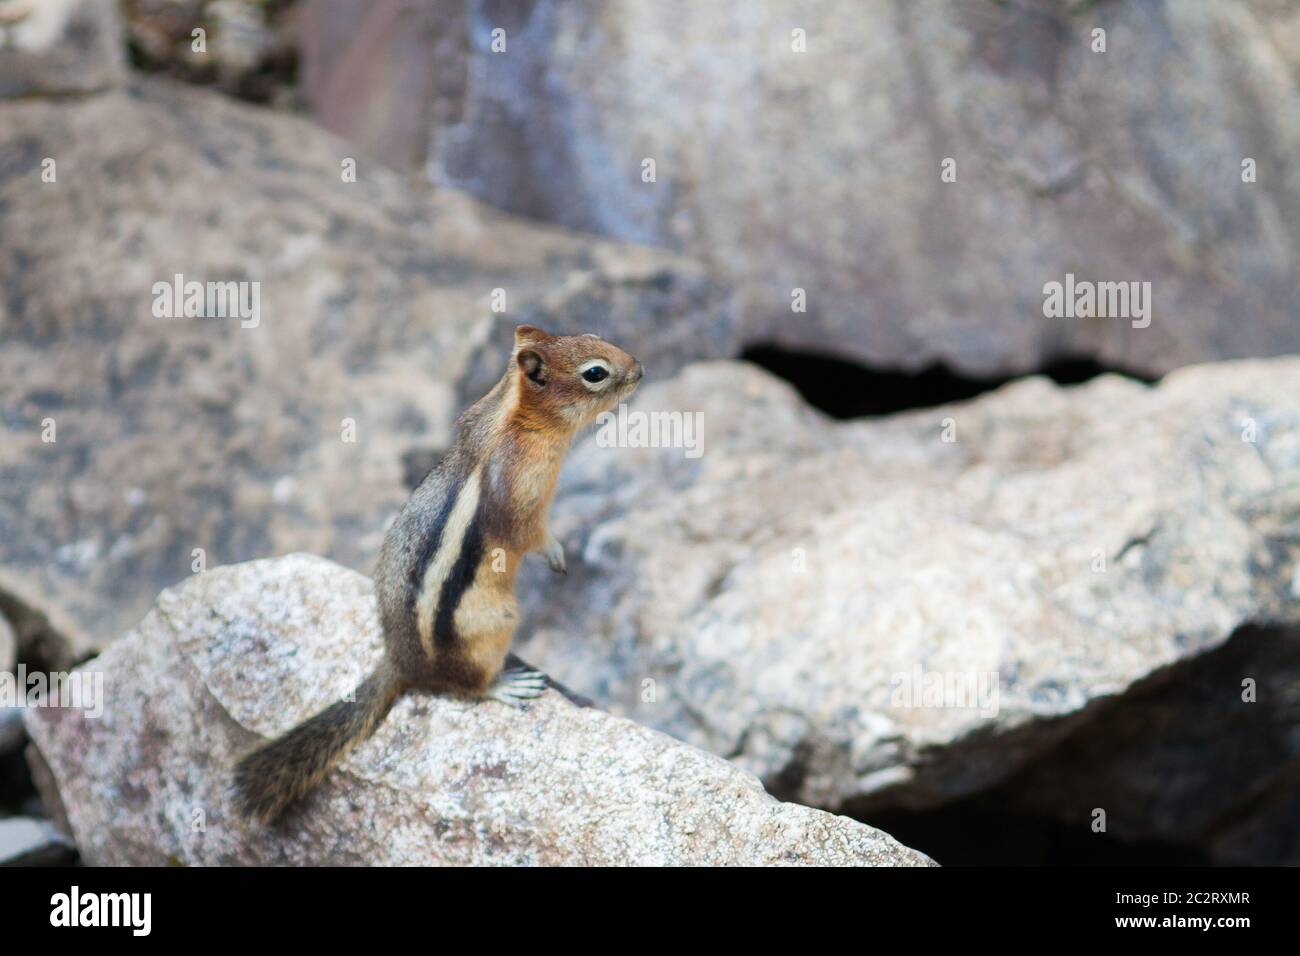 A little cute squirrel on rocks in Banff National Park, Alberta, Canada Stock Photo